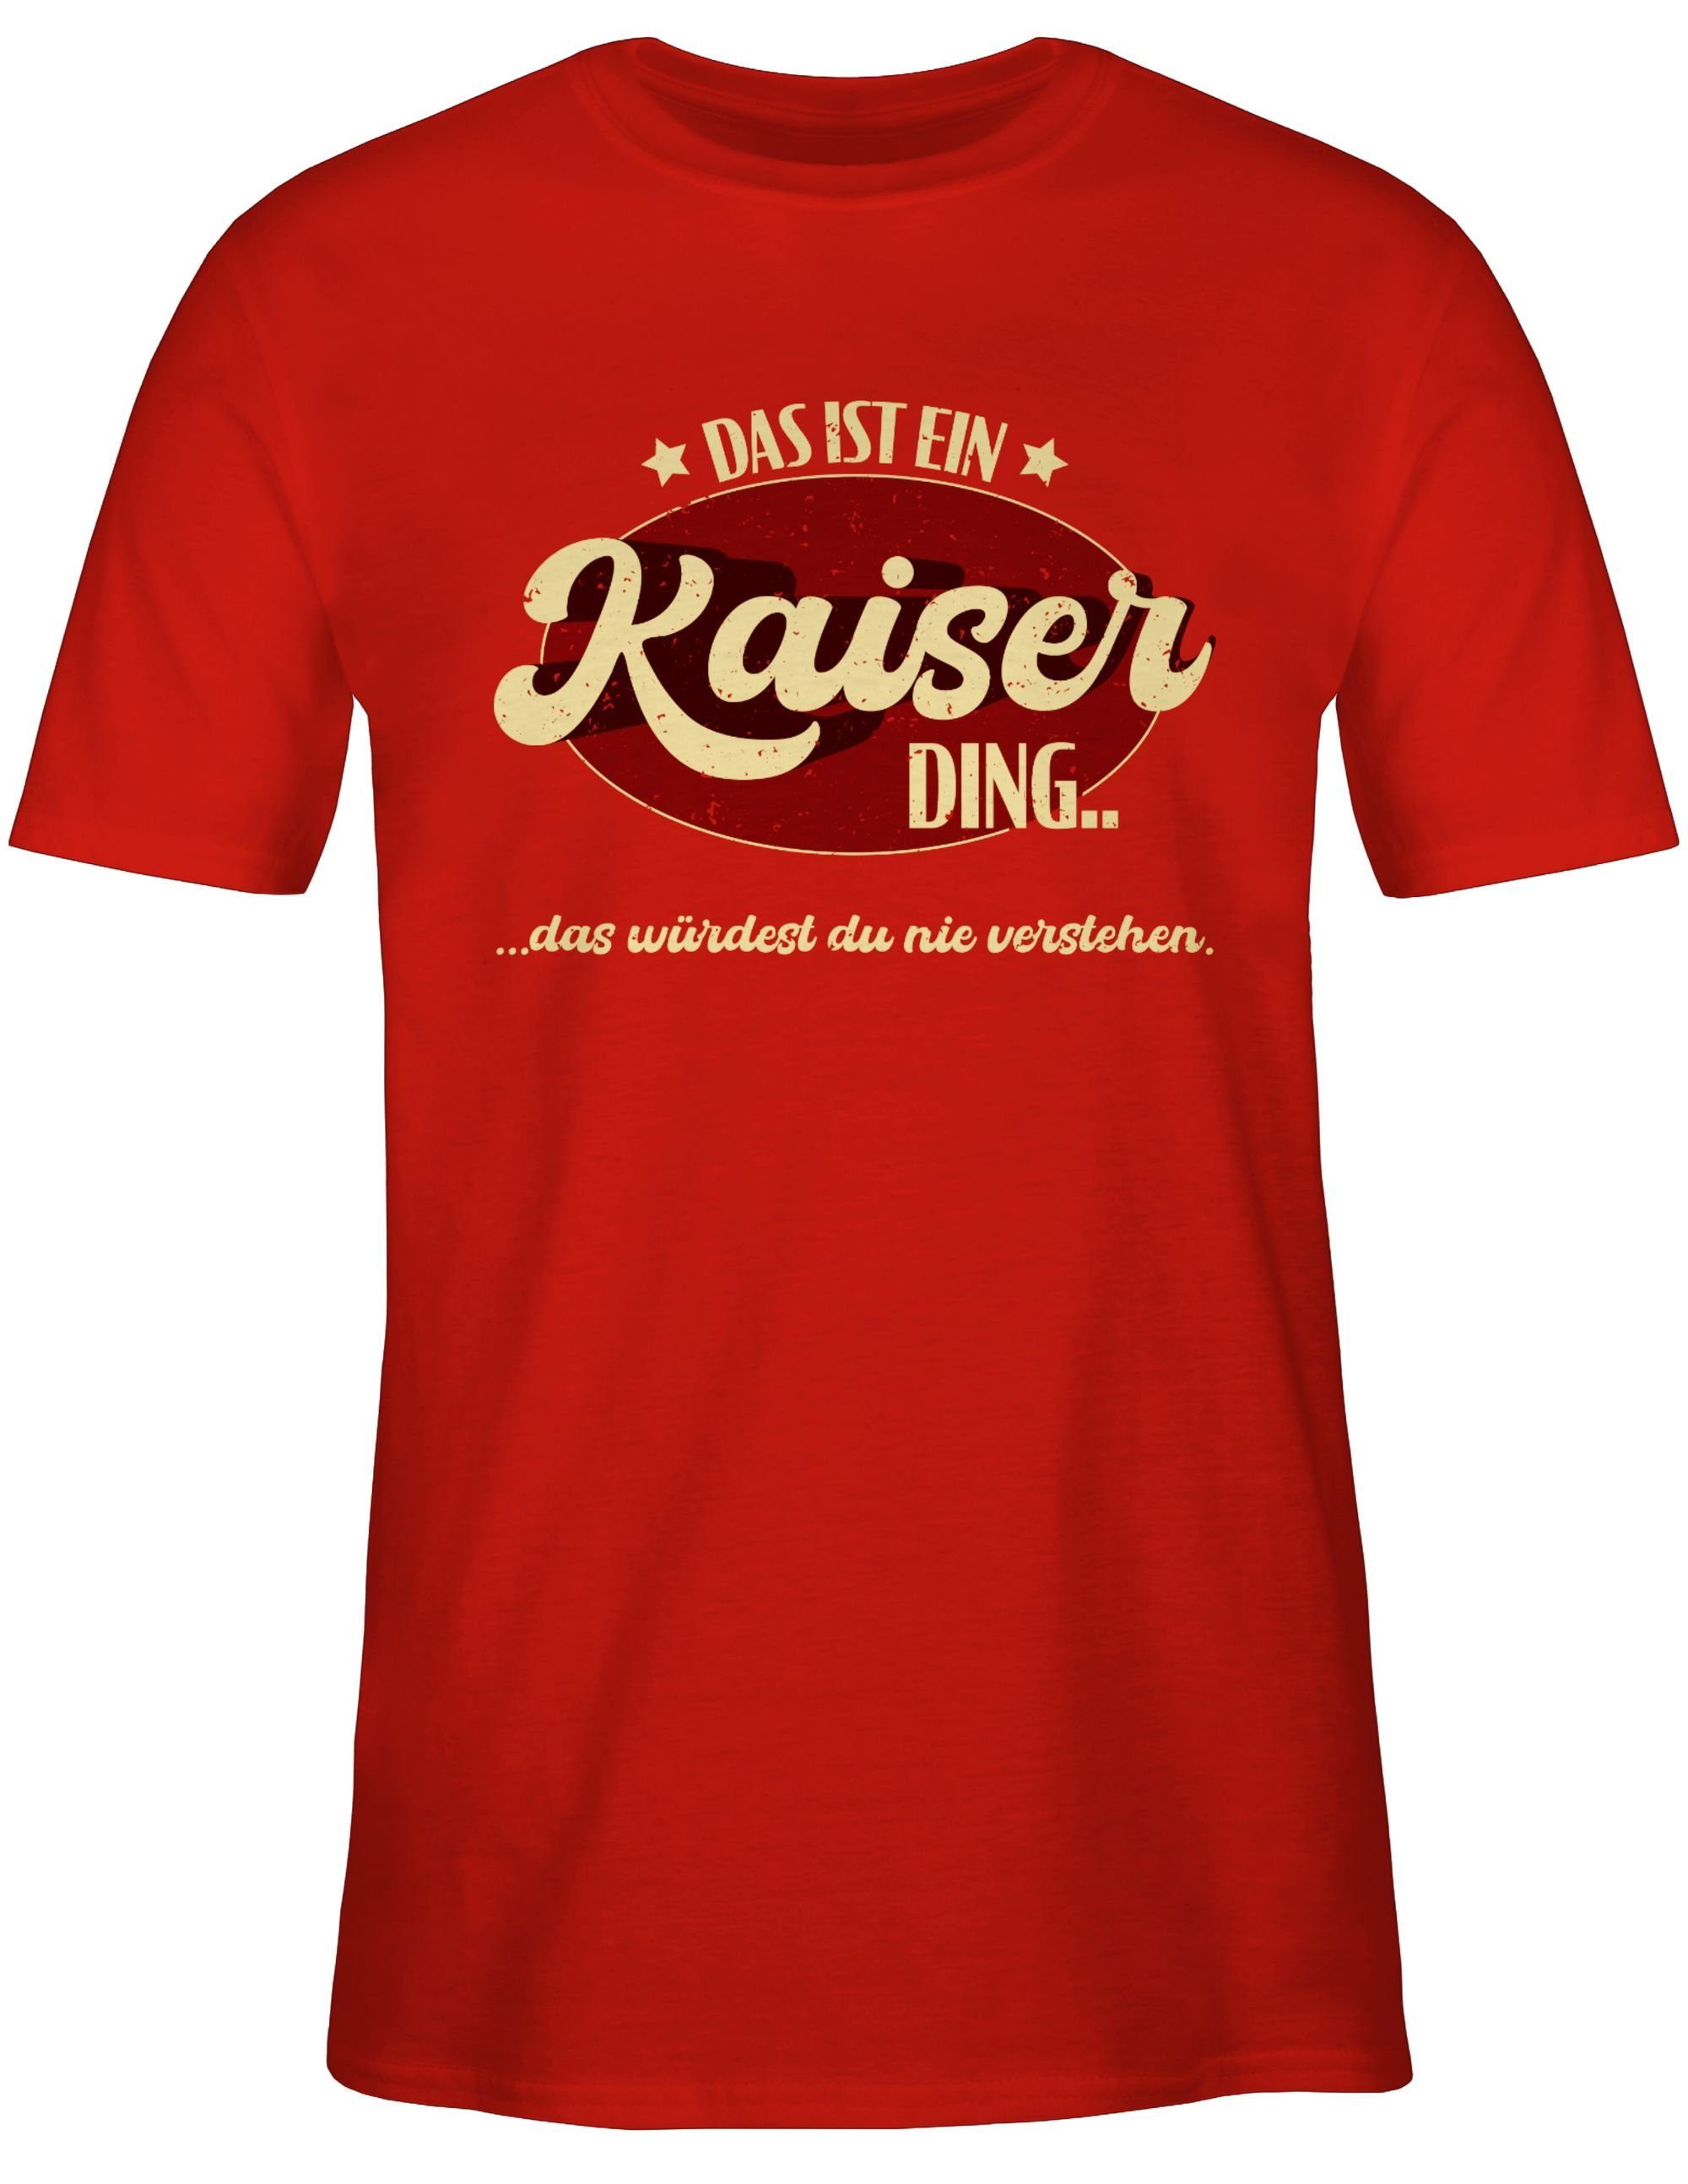 Rot ist Shirtracer Ding ein Das 03 - Kaiserding T-Shirt Outfit Kaiser Schlager Party